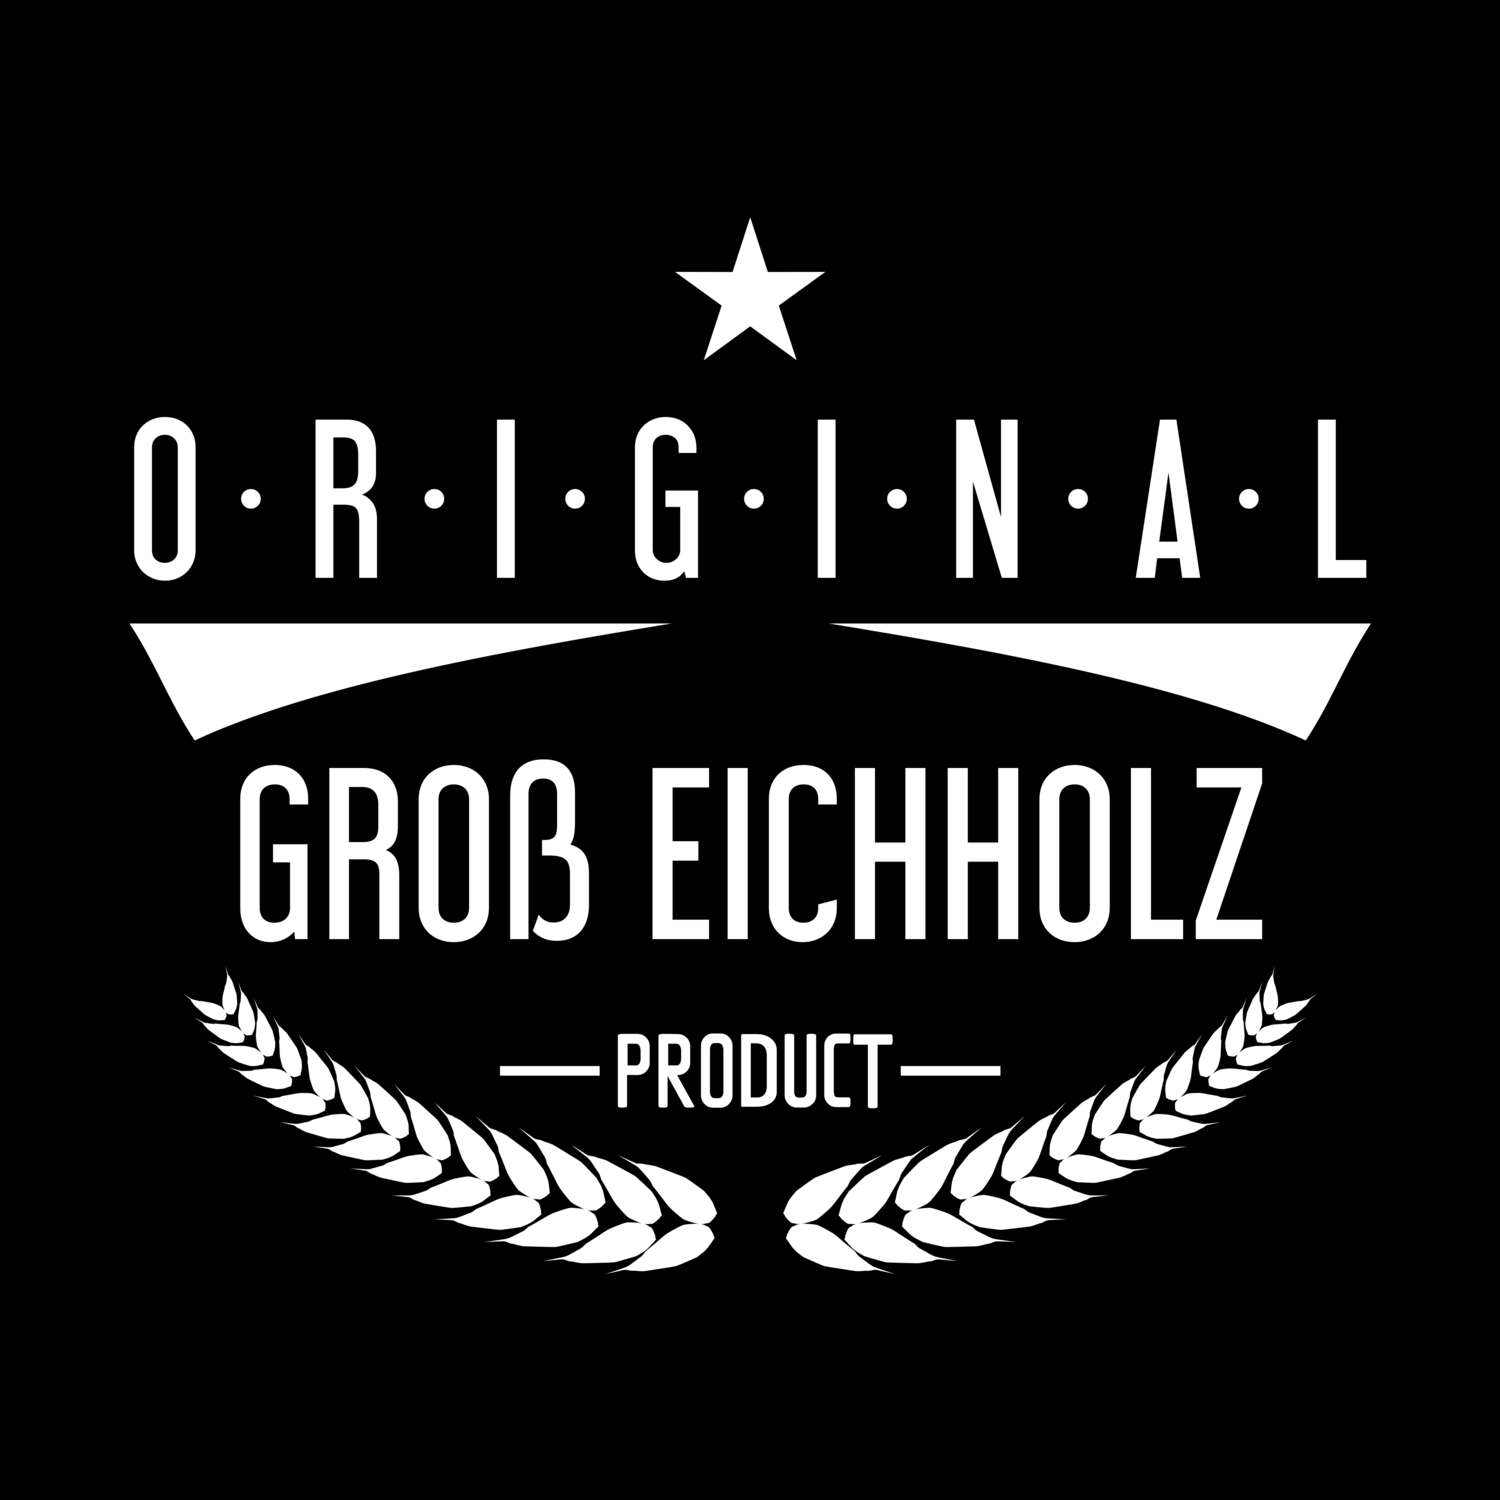 Groß Eichholz T-Shirt »Original Product«